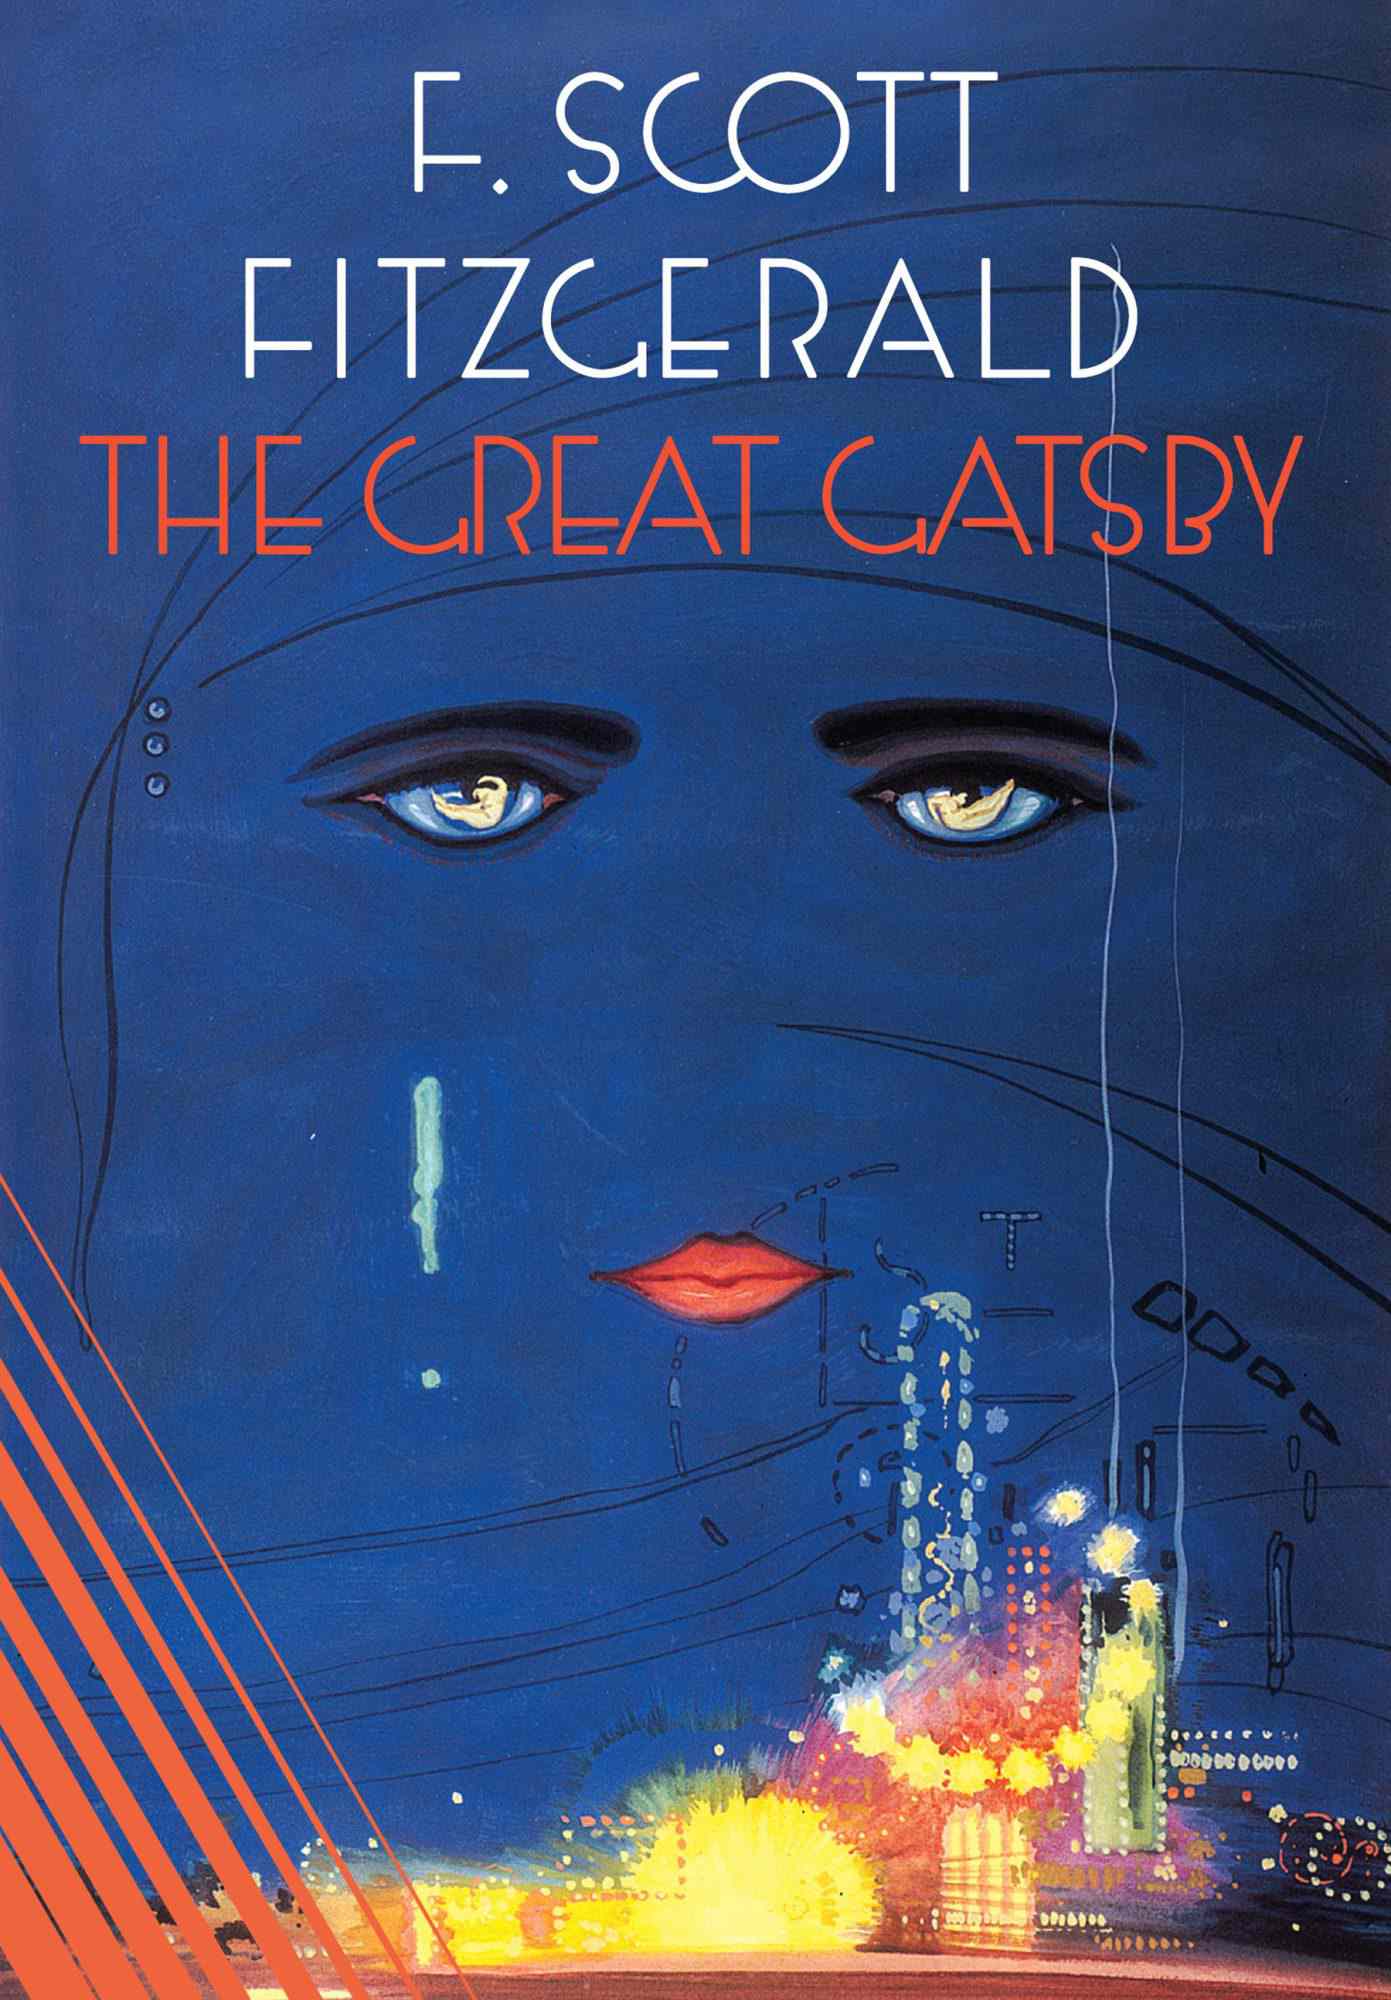 The Great Gatsby (9/30/04)by F. Scott Fitzgerald